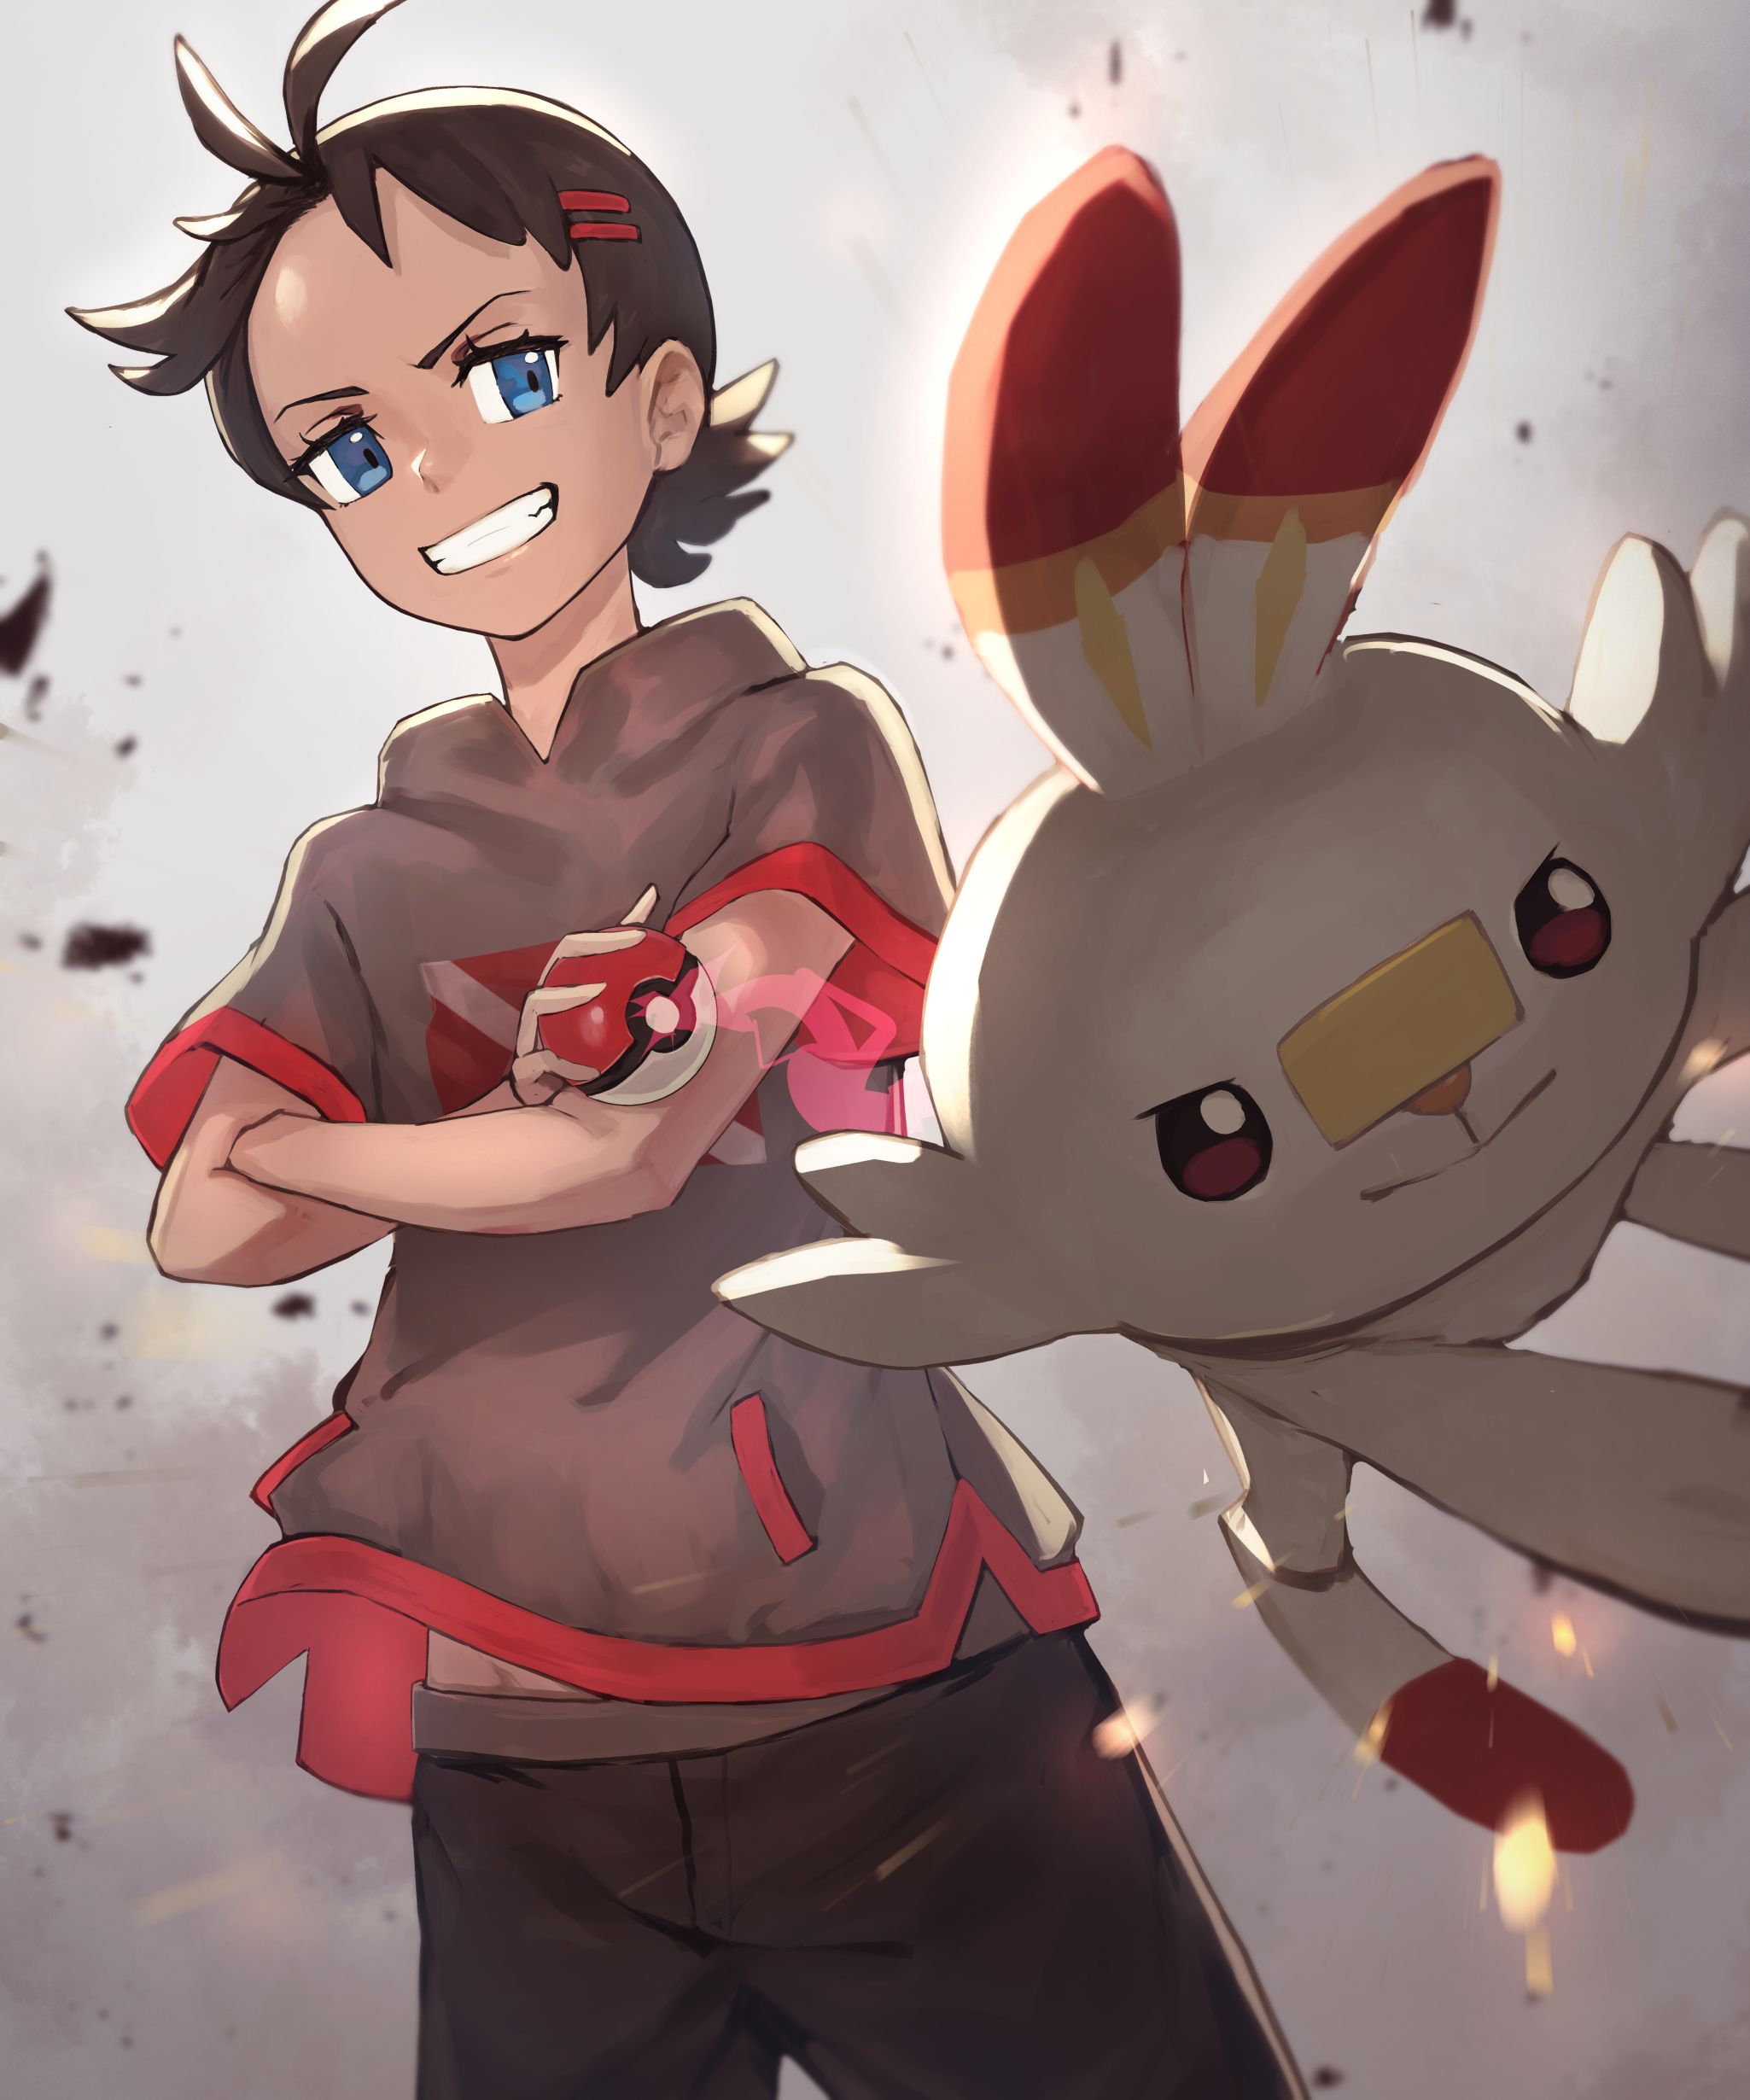 Gou (Pokémon)émon (Anime) Anime Image Board